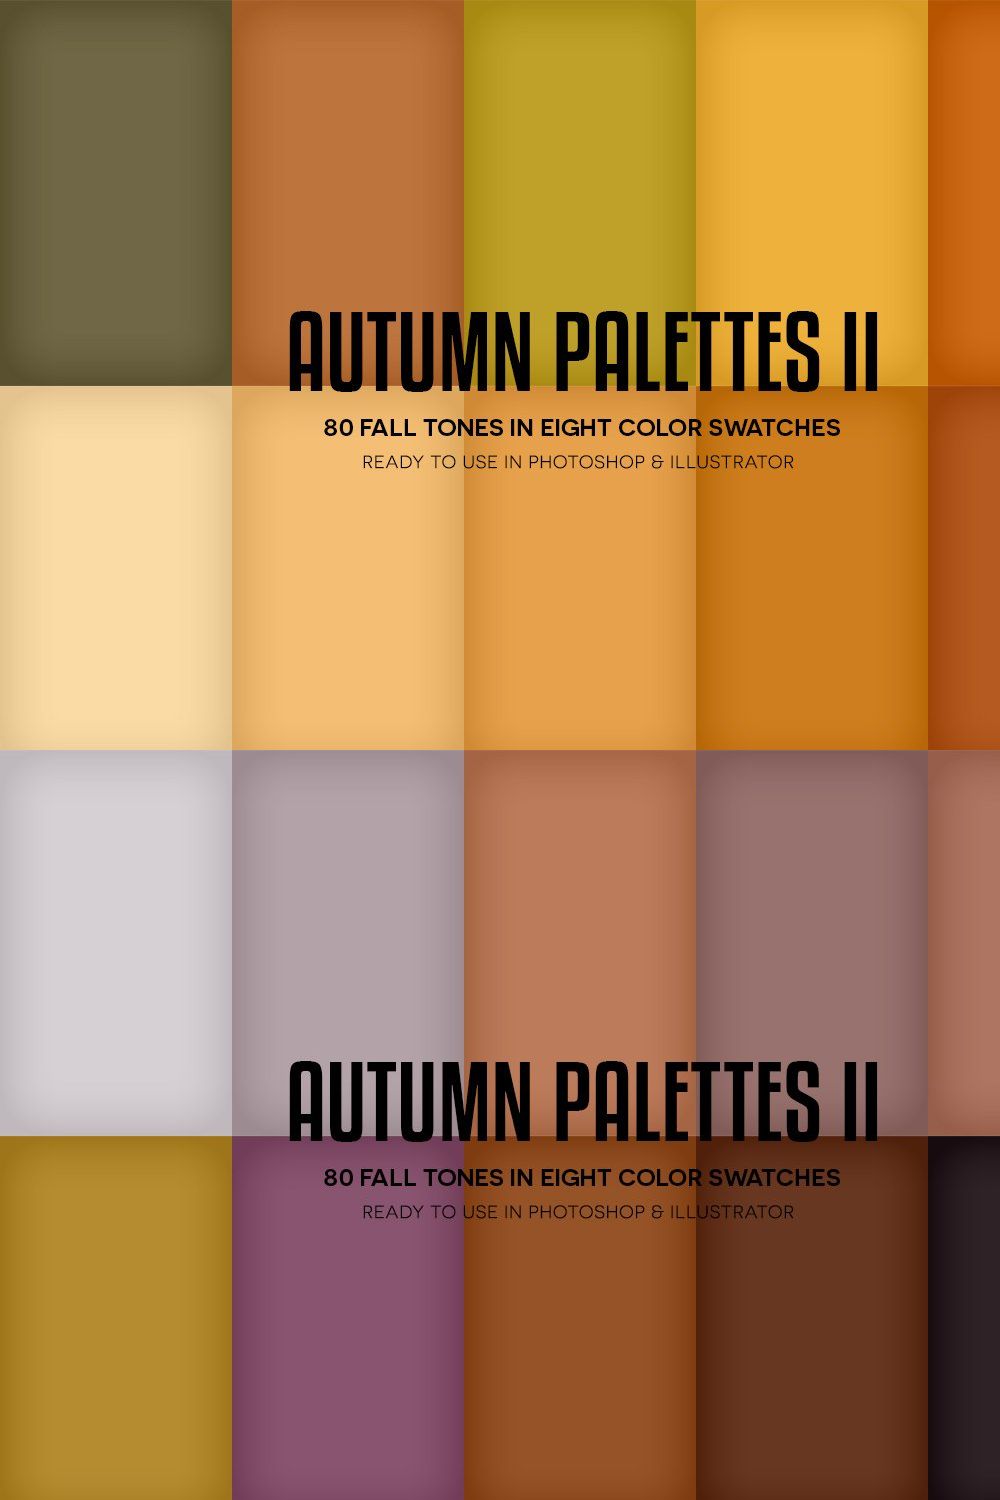 Autumn Palettes II pinterest preview image.